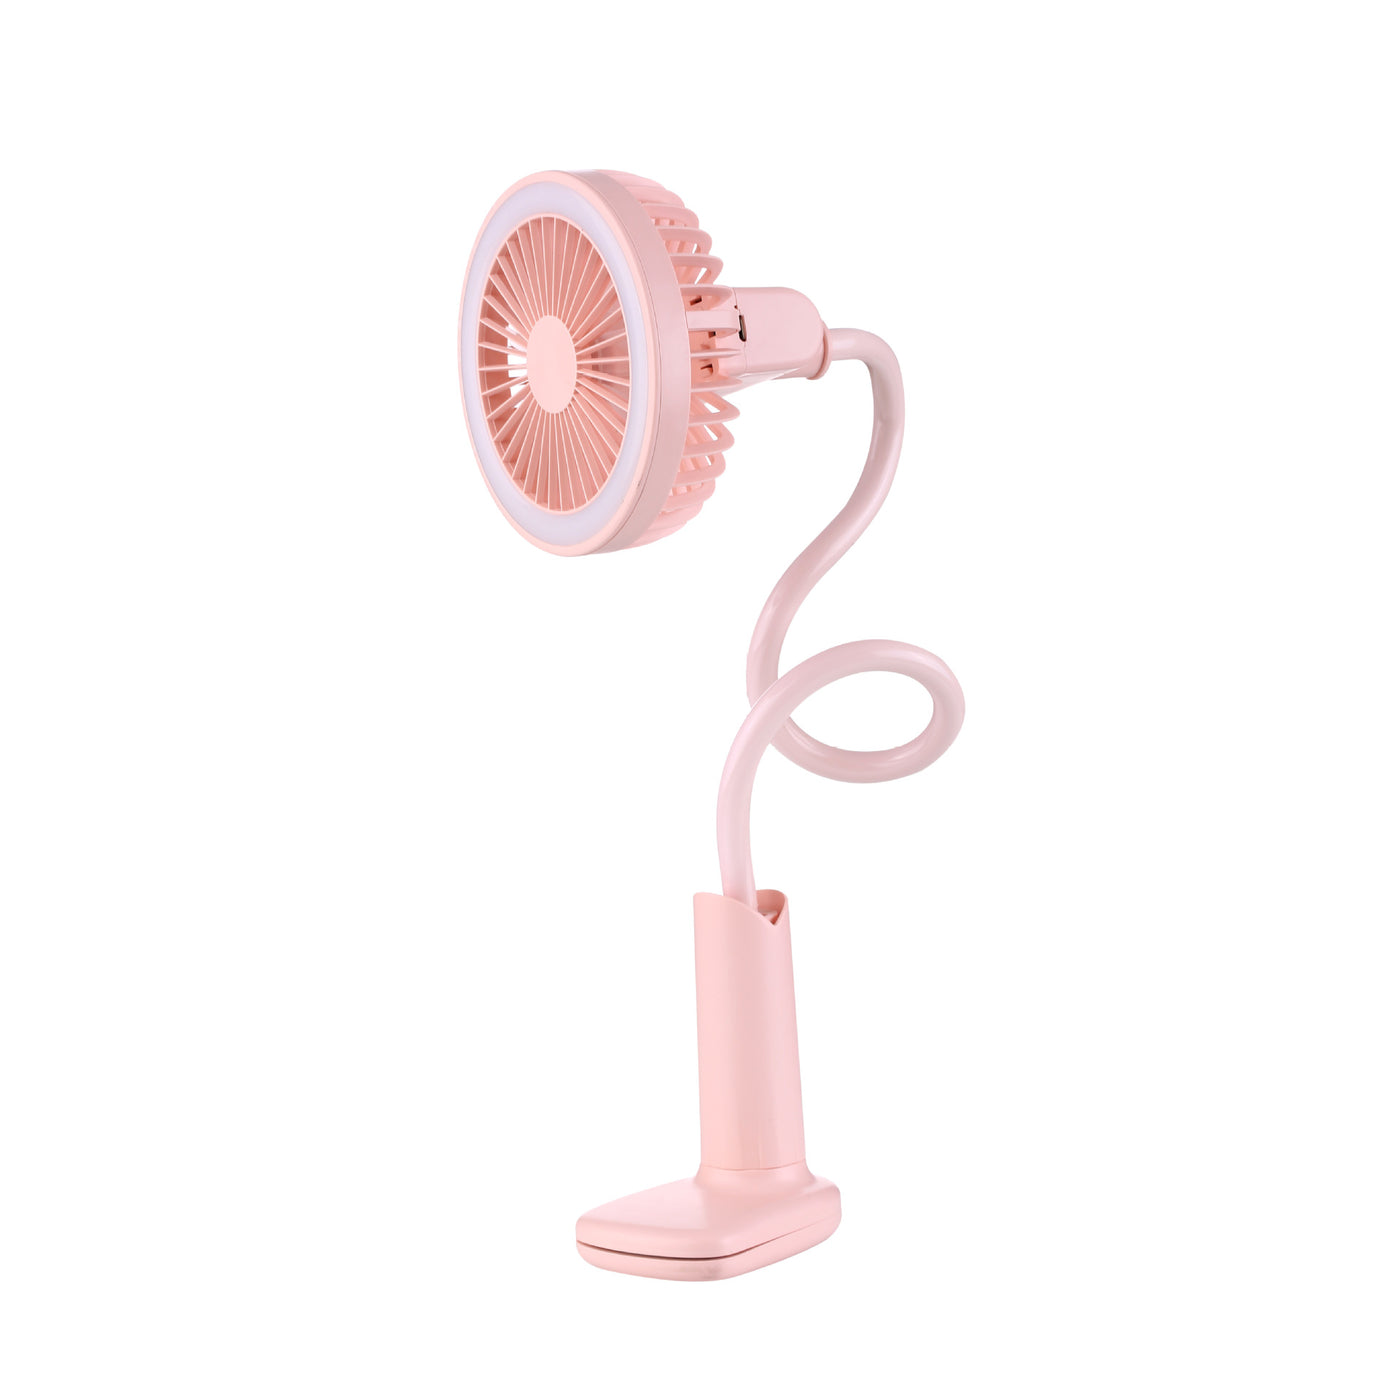 USB Portable Flexible Fan With LED Light